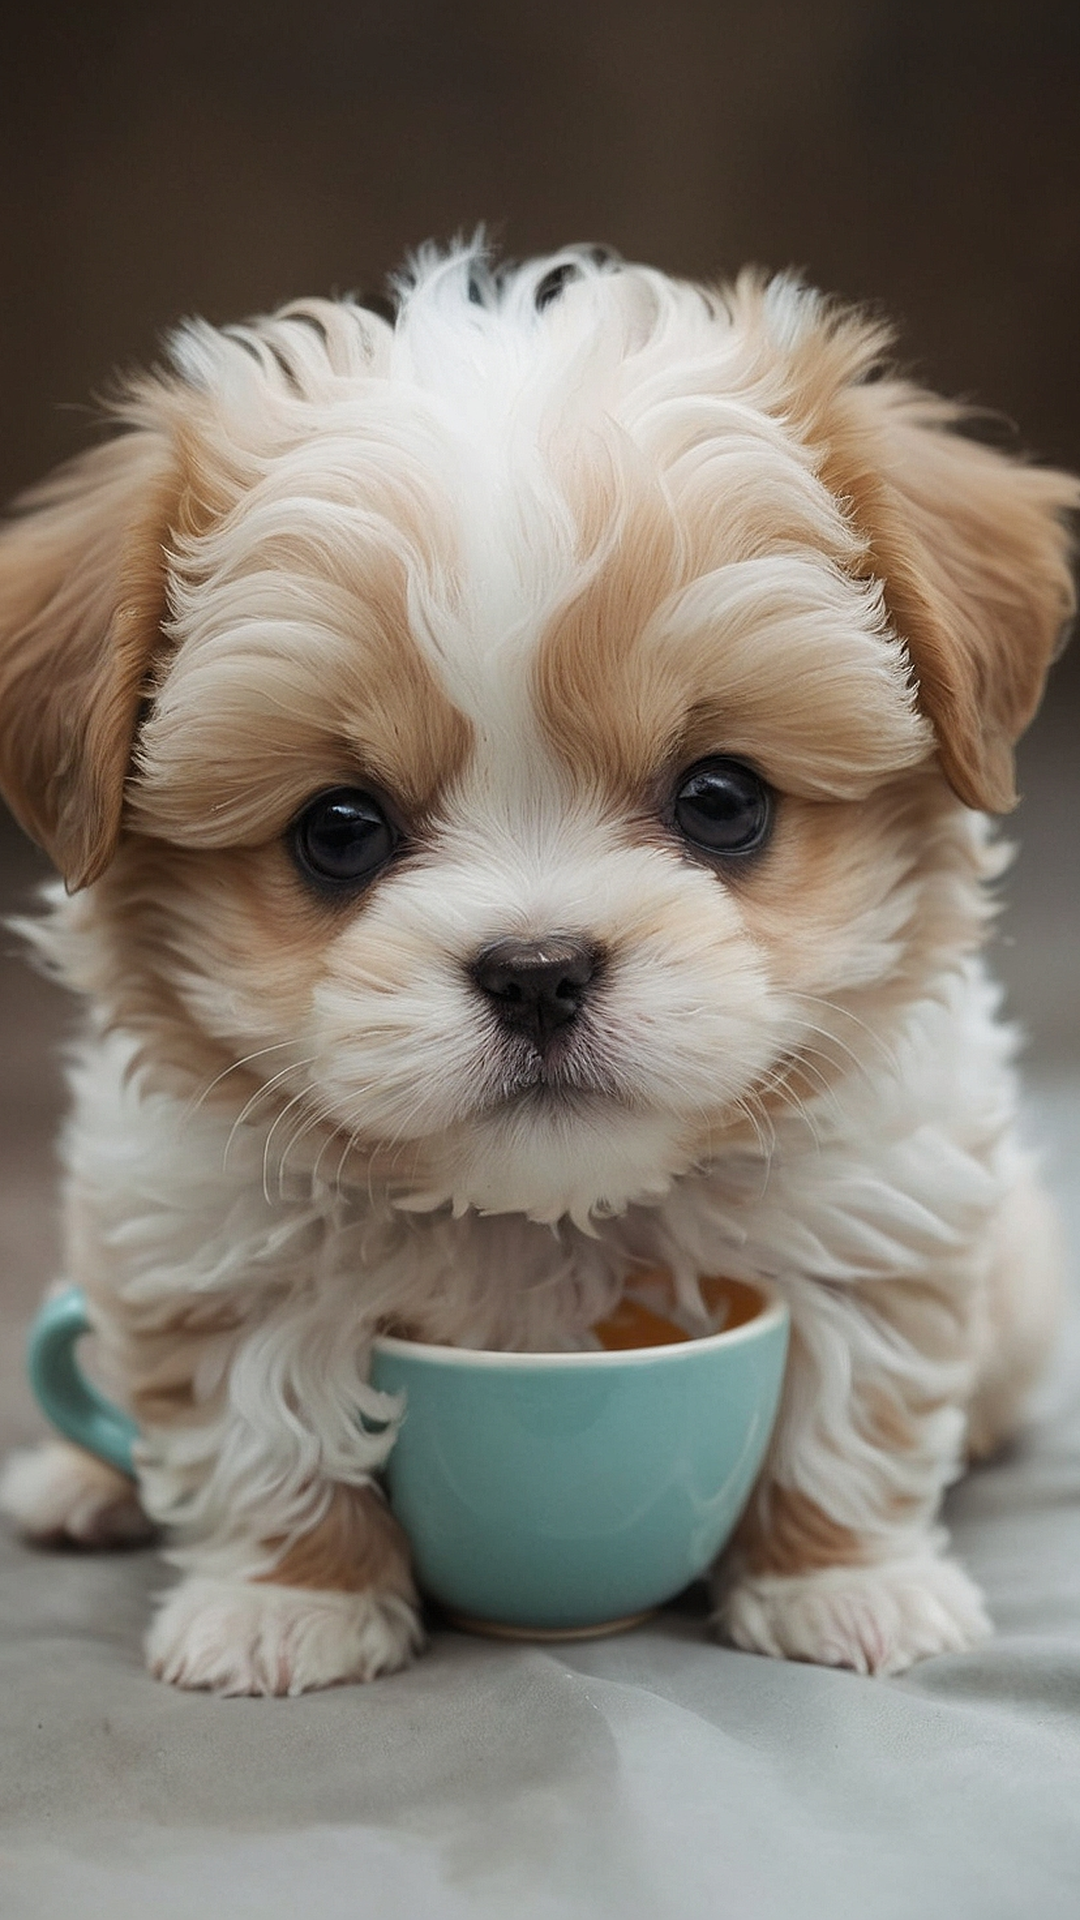 Little Furry Angels: Cute Teacup Poodles